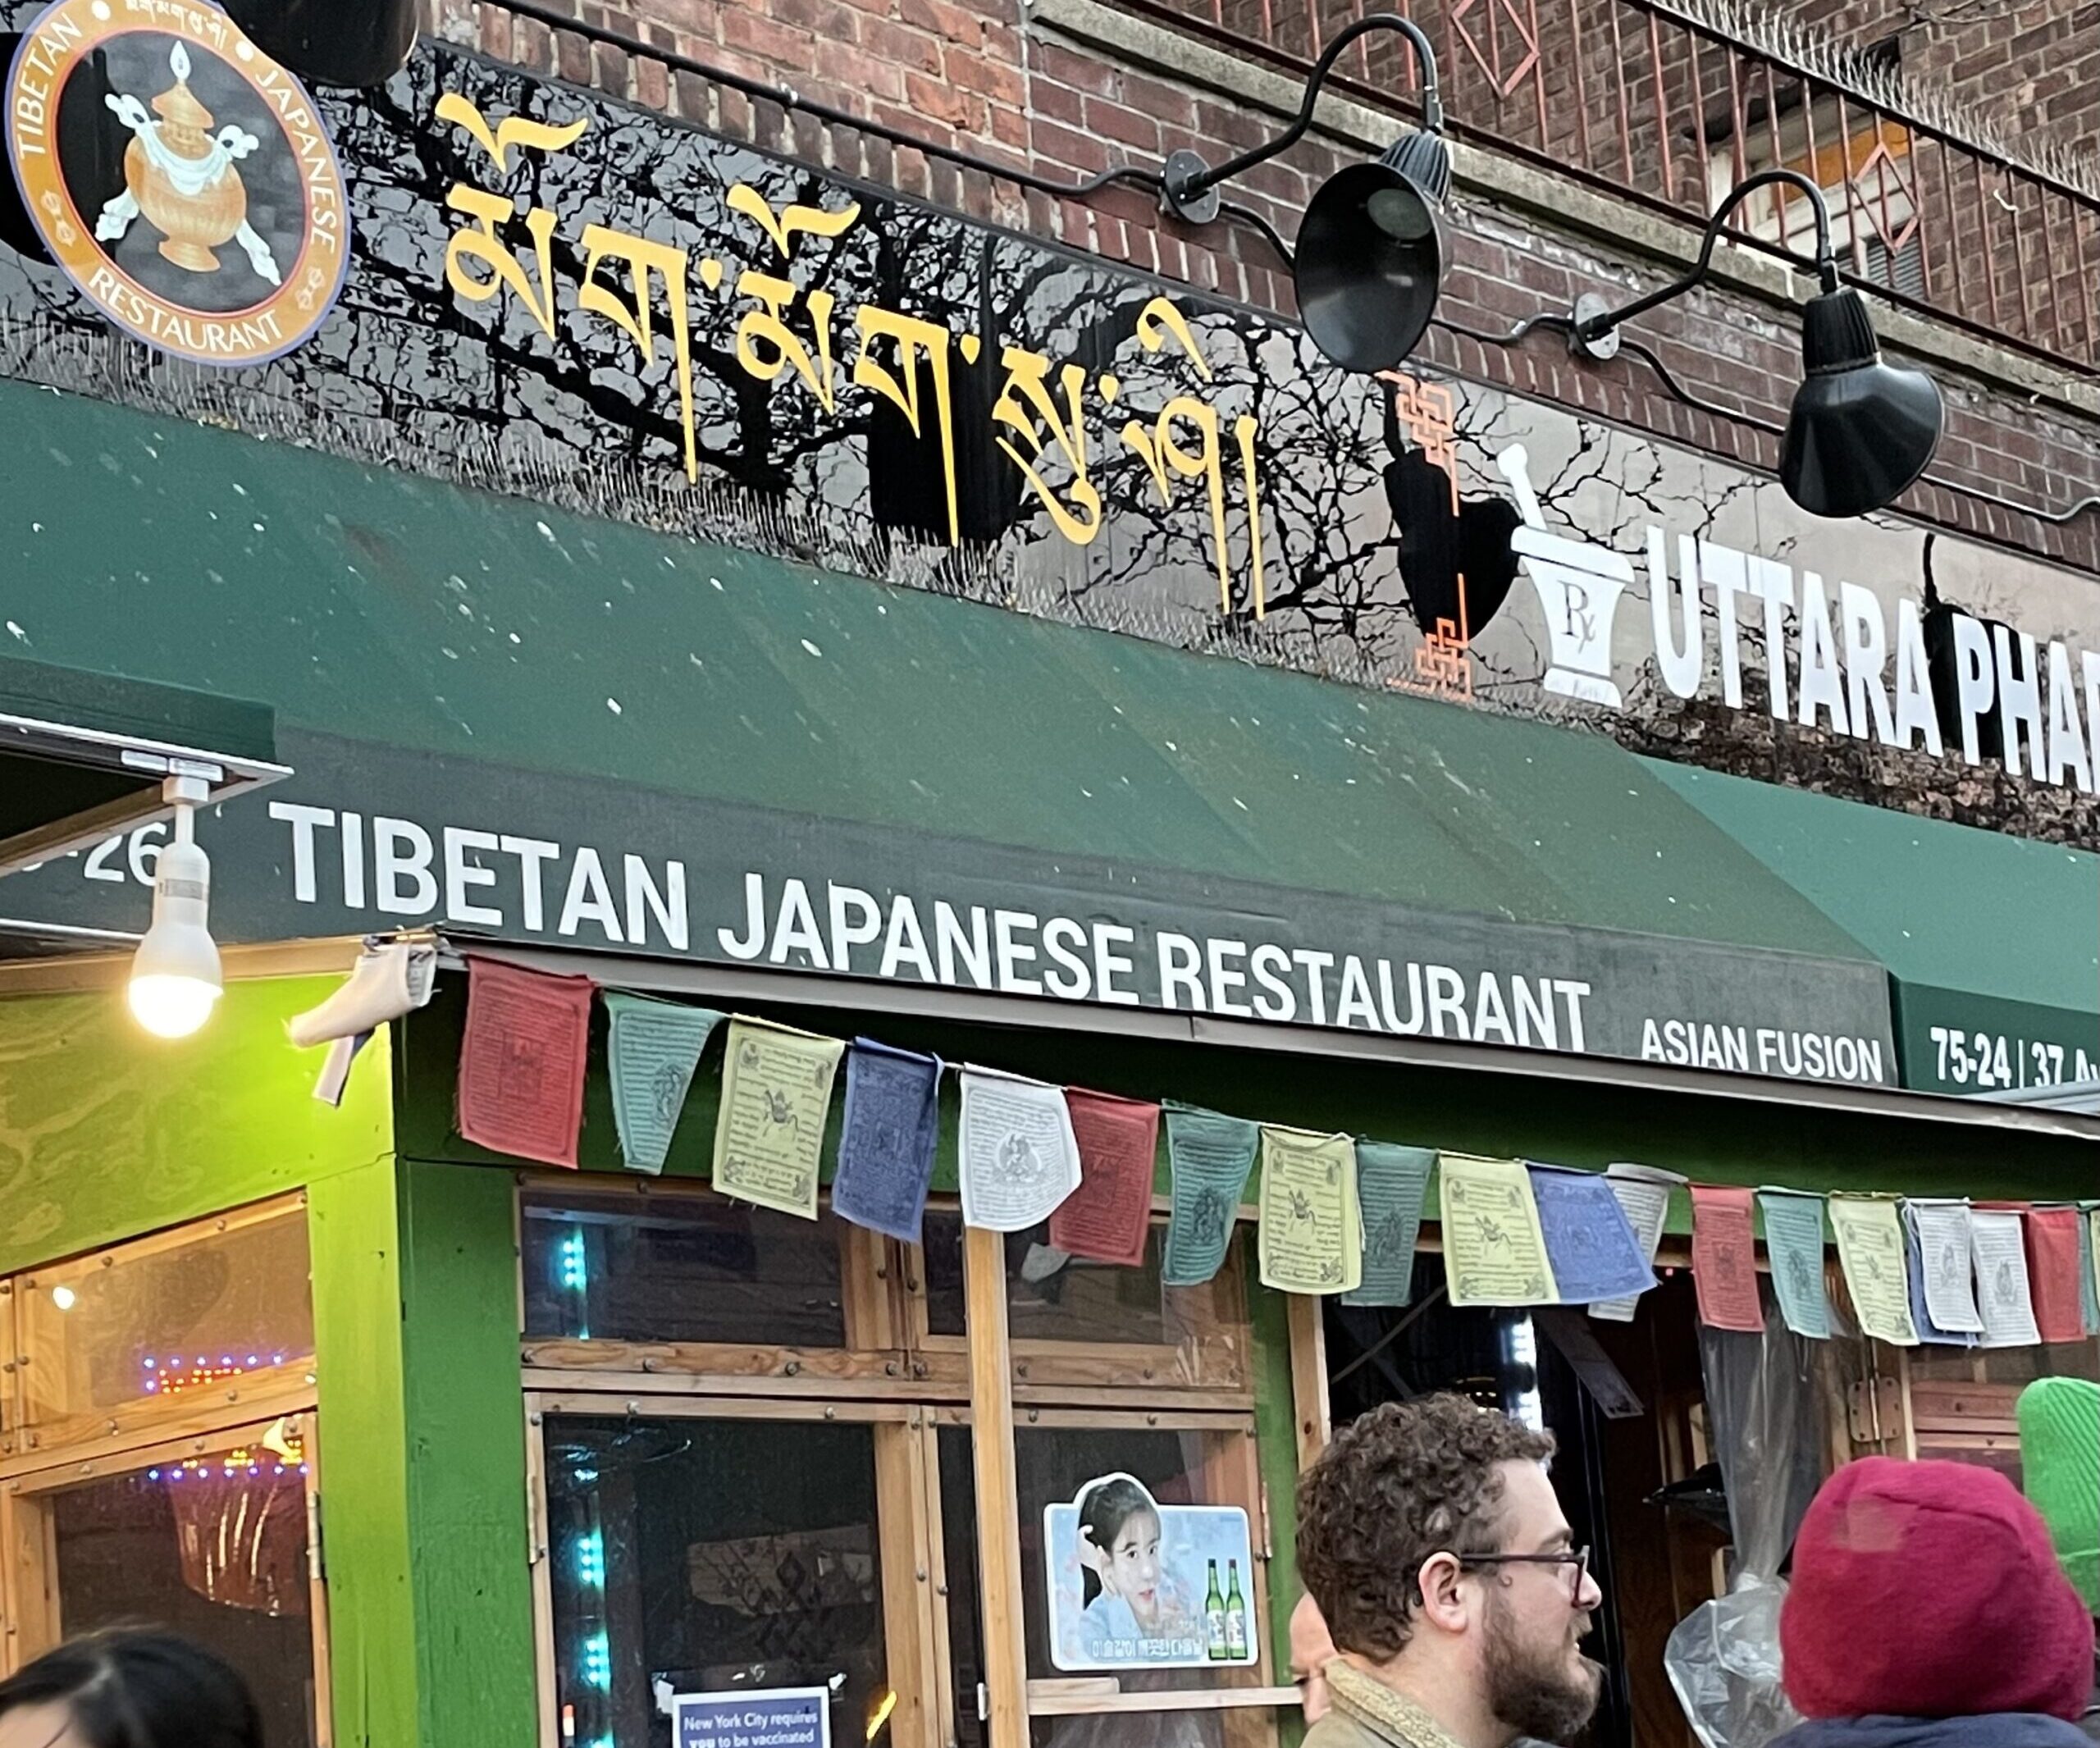 Tibetan Japanese Restaurant Storefront in Jackson Heights